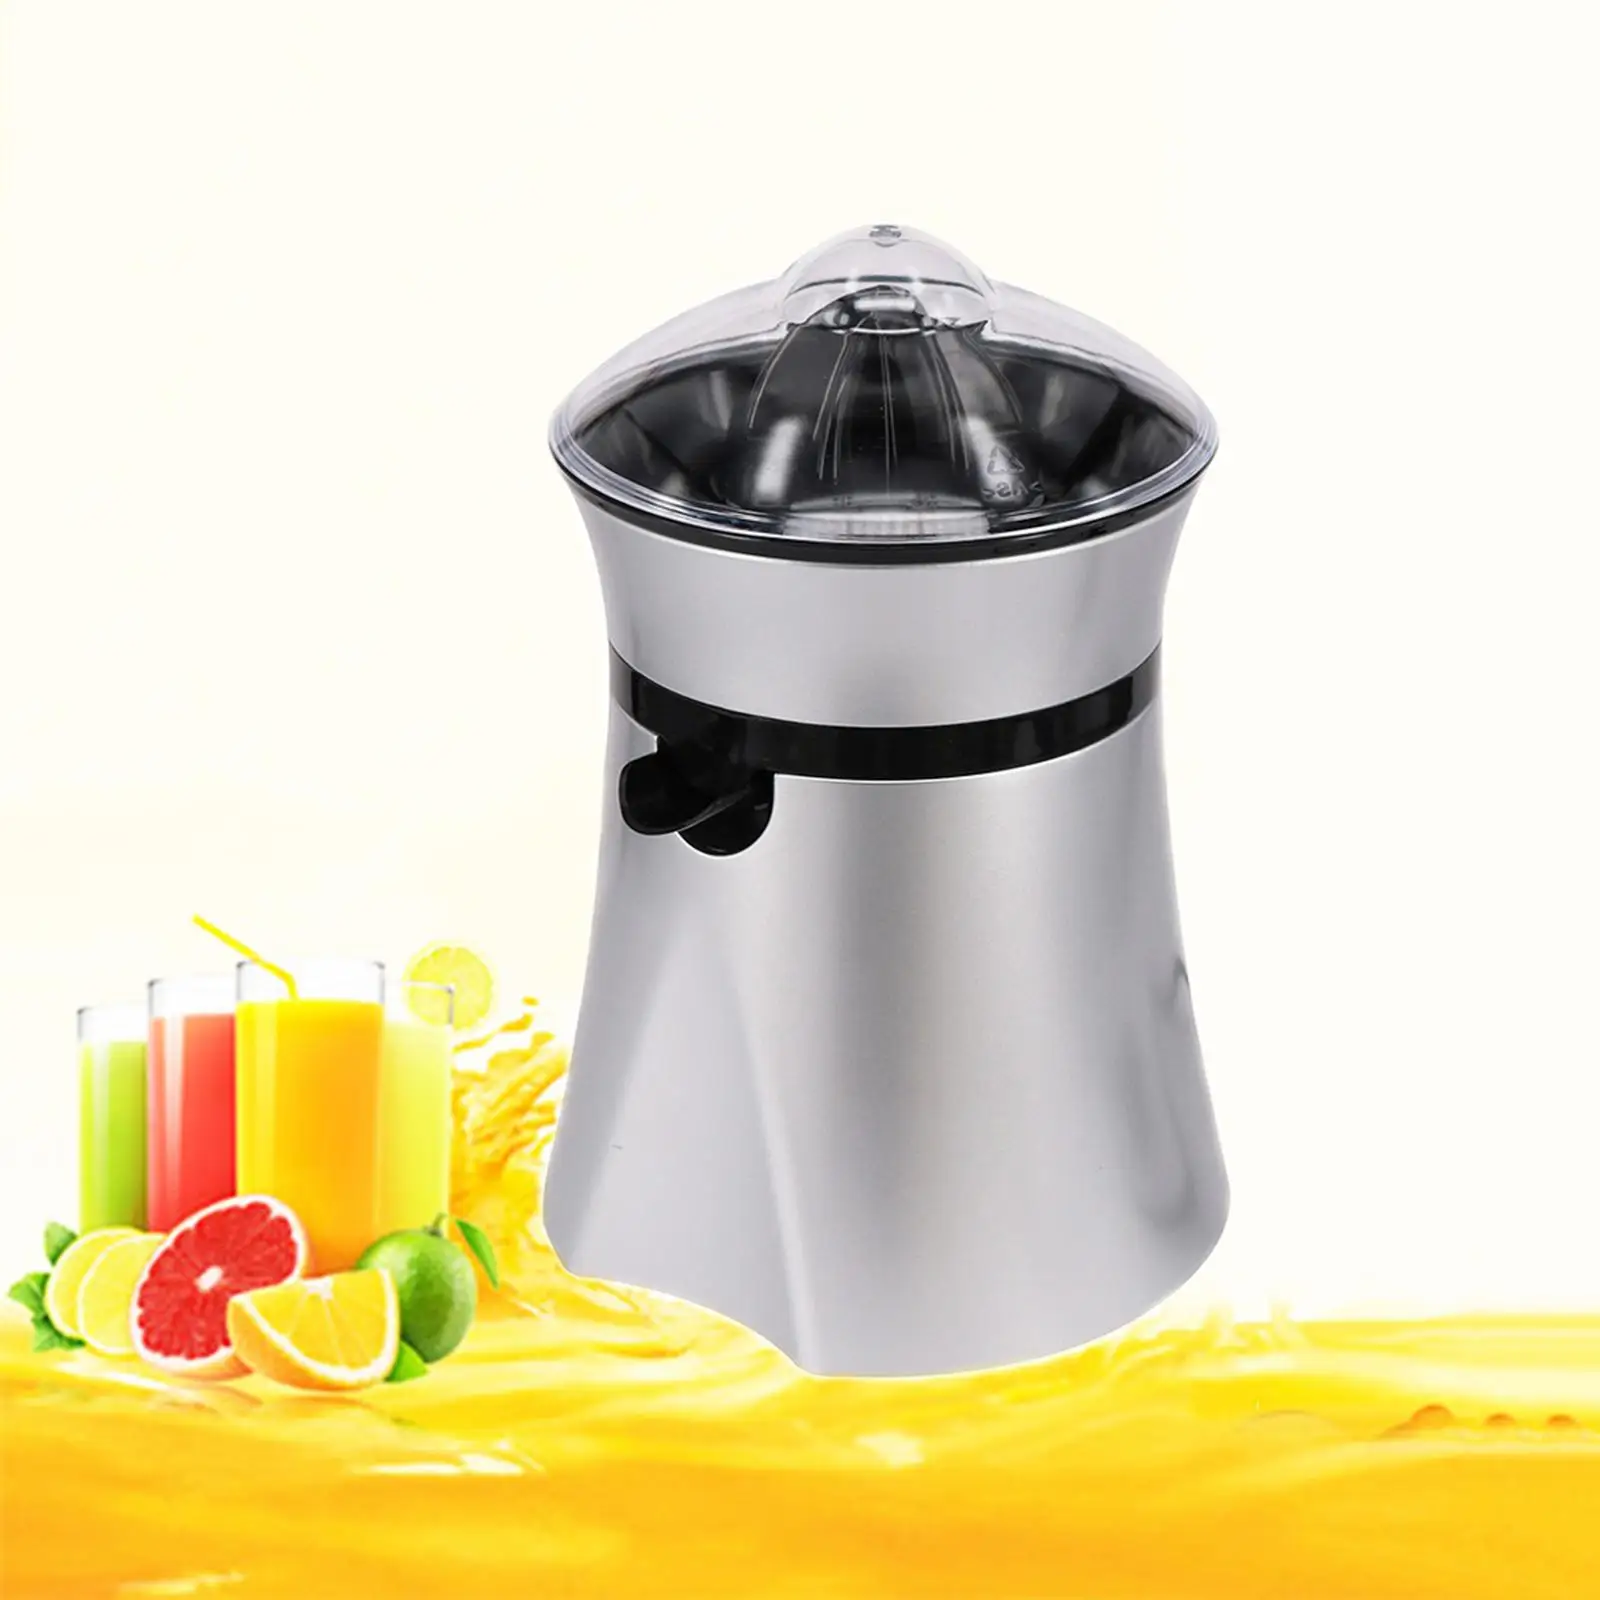 Stainless Steel Electric Juicer Anti-Drip Spout 400ml Lemon Juicer Fruit Juicer Juicer for Kitchen Home Gadgets